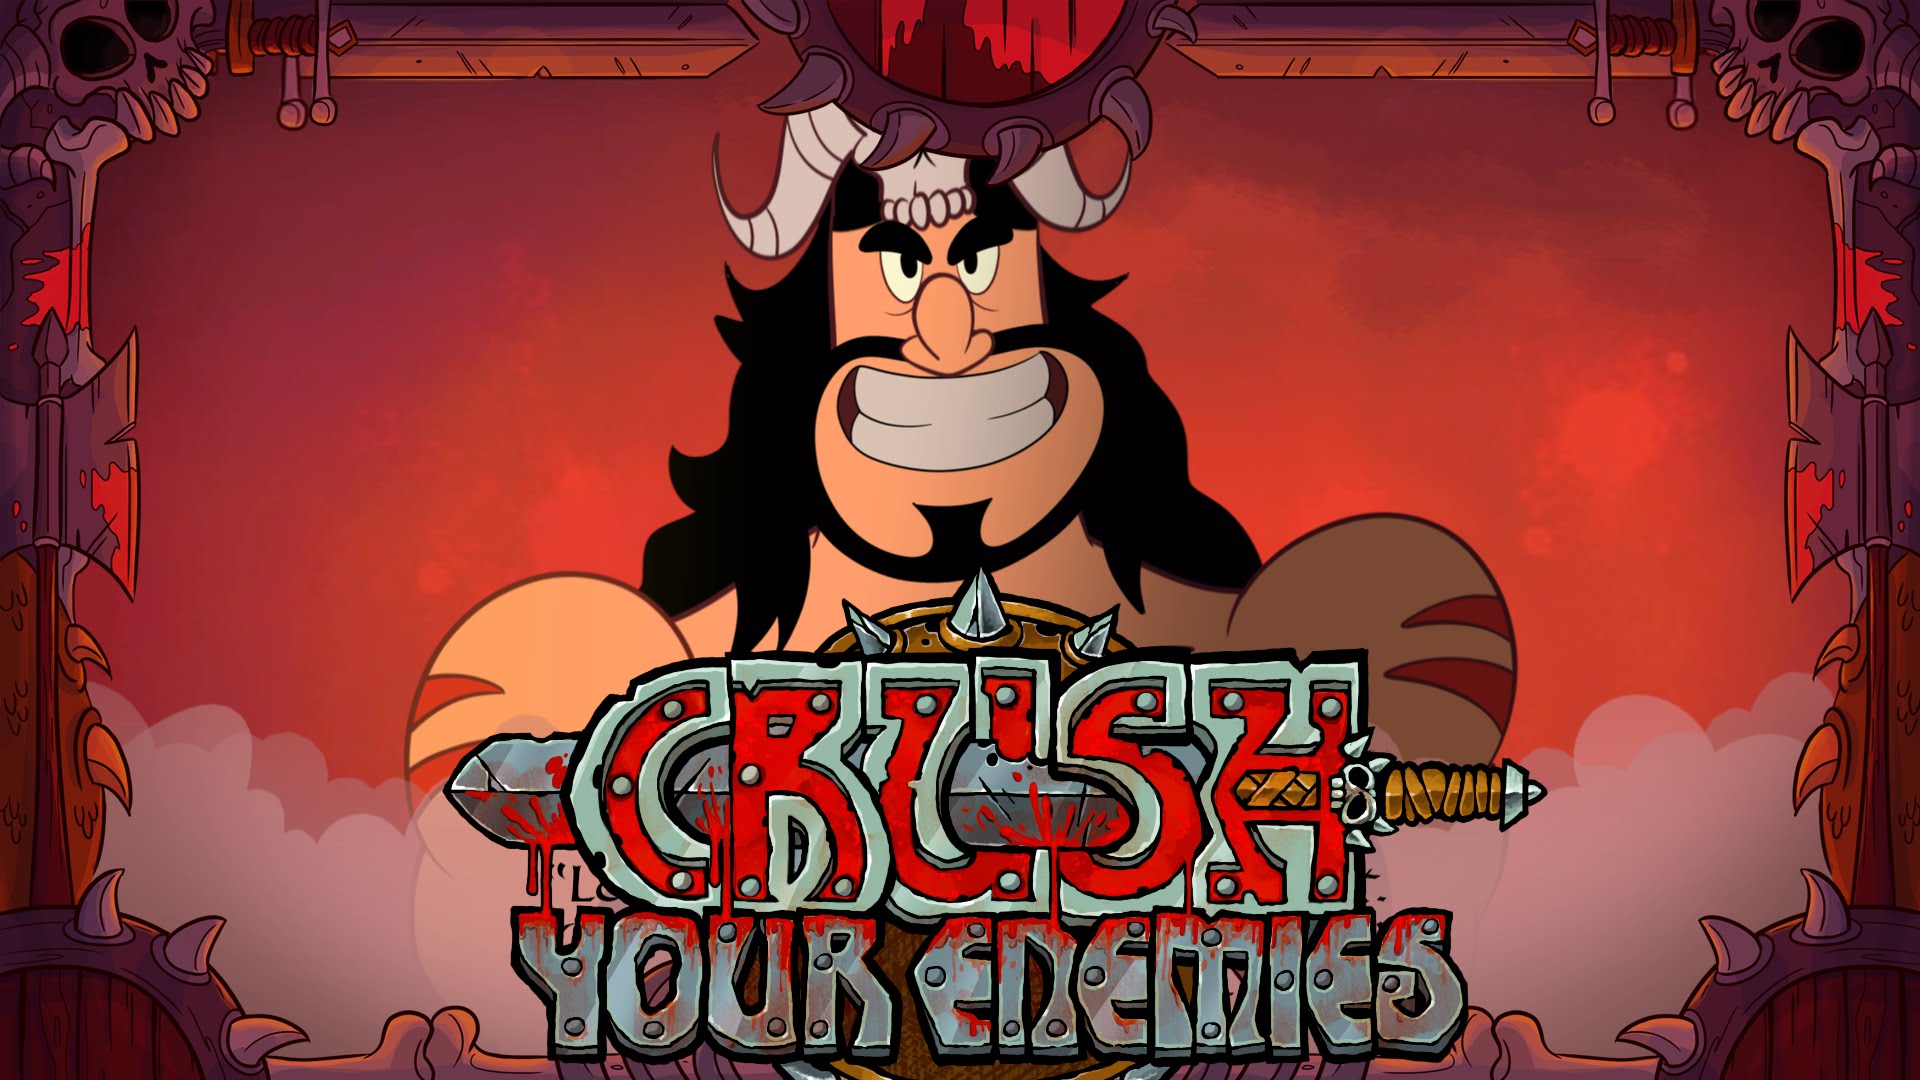 Crush Your Enemies - Google Play Store Trailer